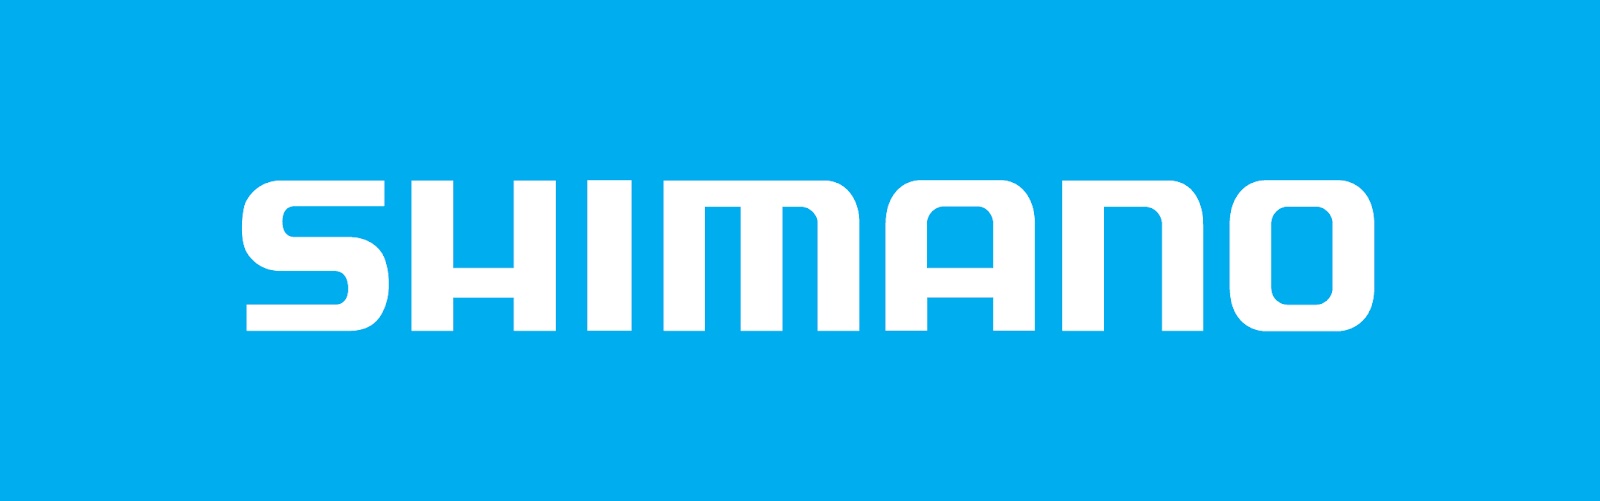 Download Shimano Logos